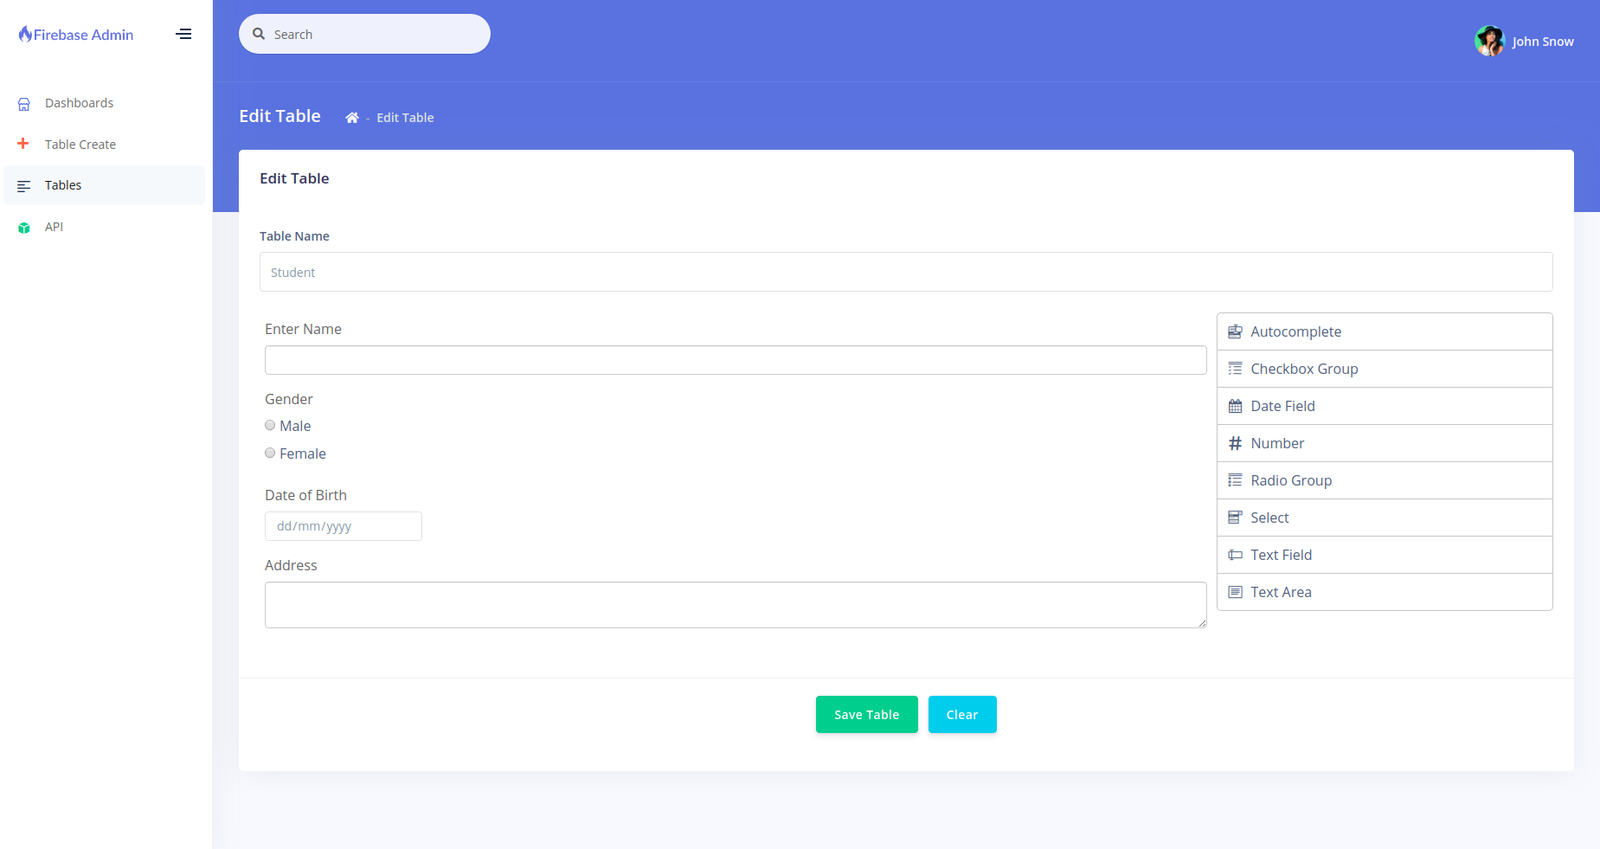 Firebase Admin Dashboard With Auto API & Form Builder - 2